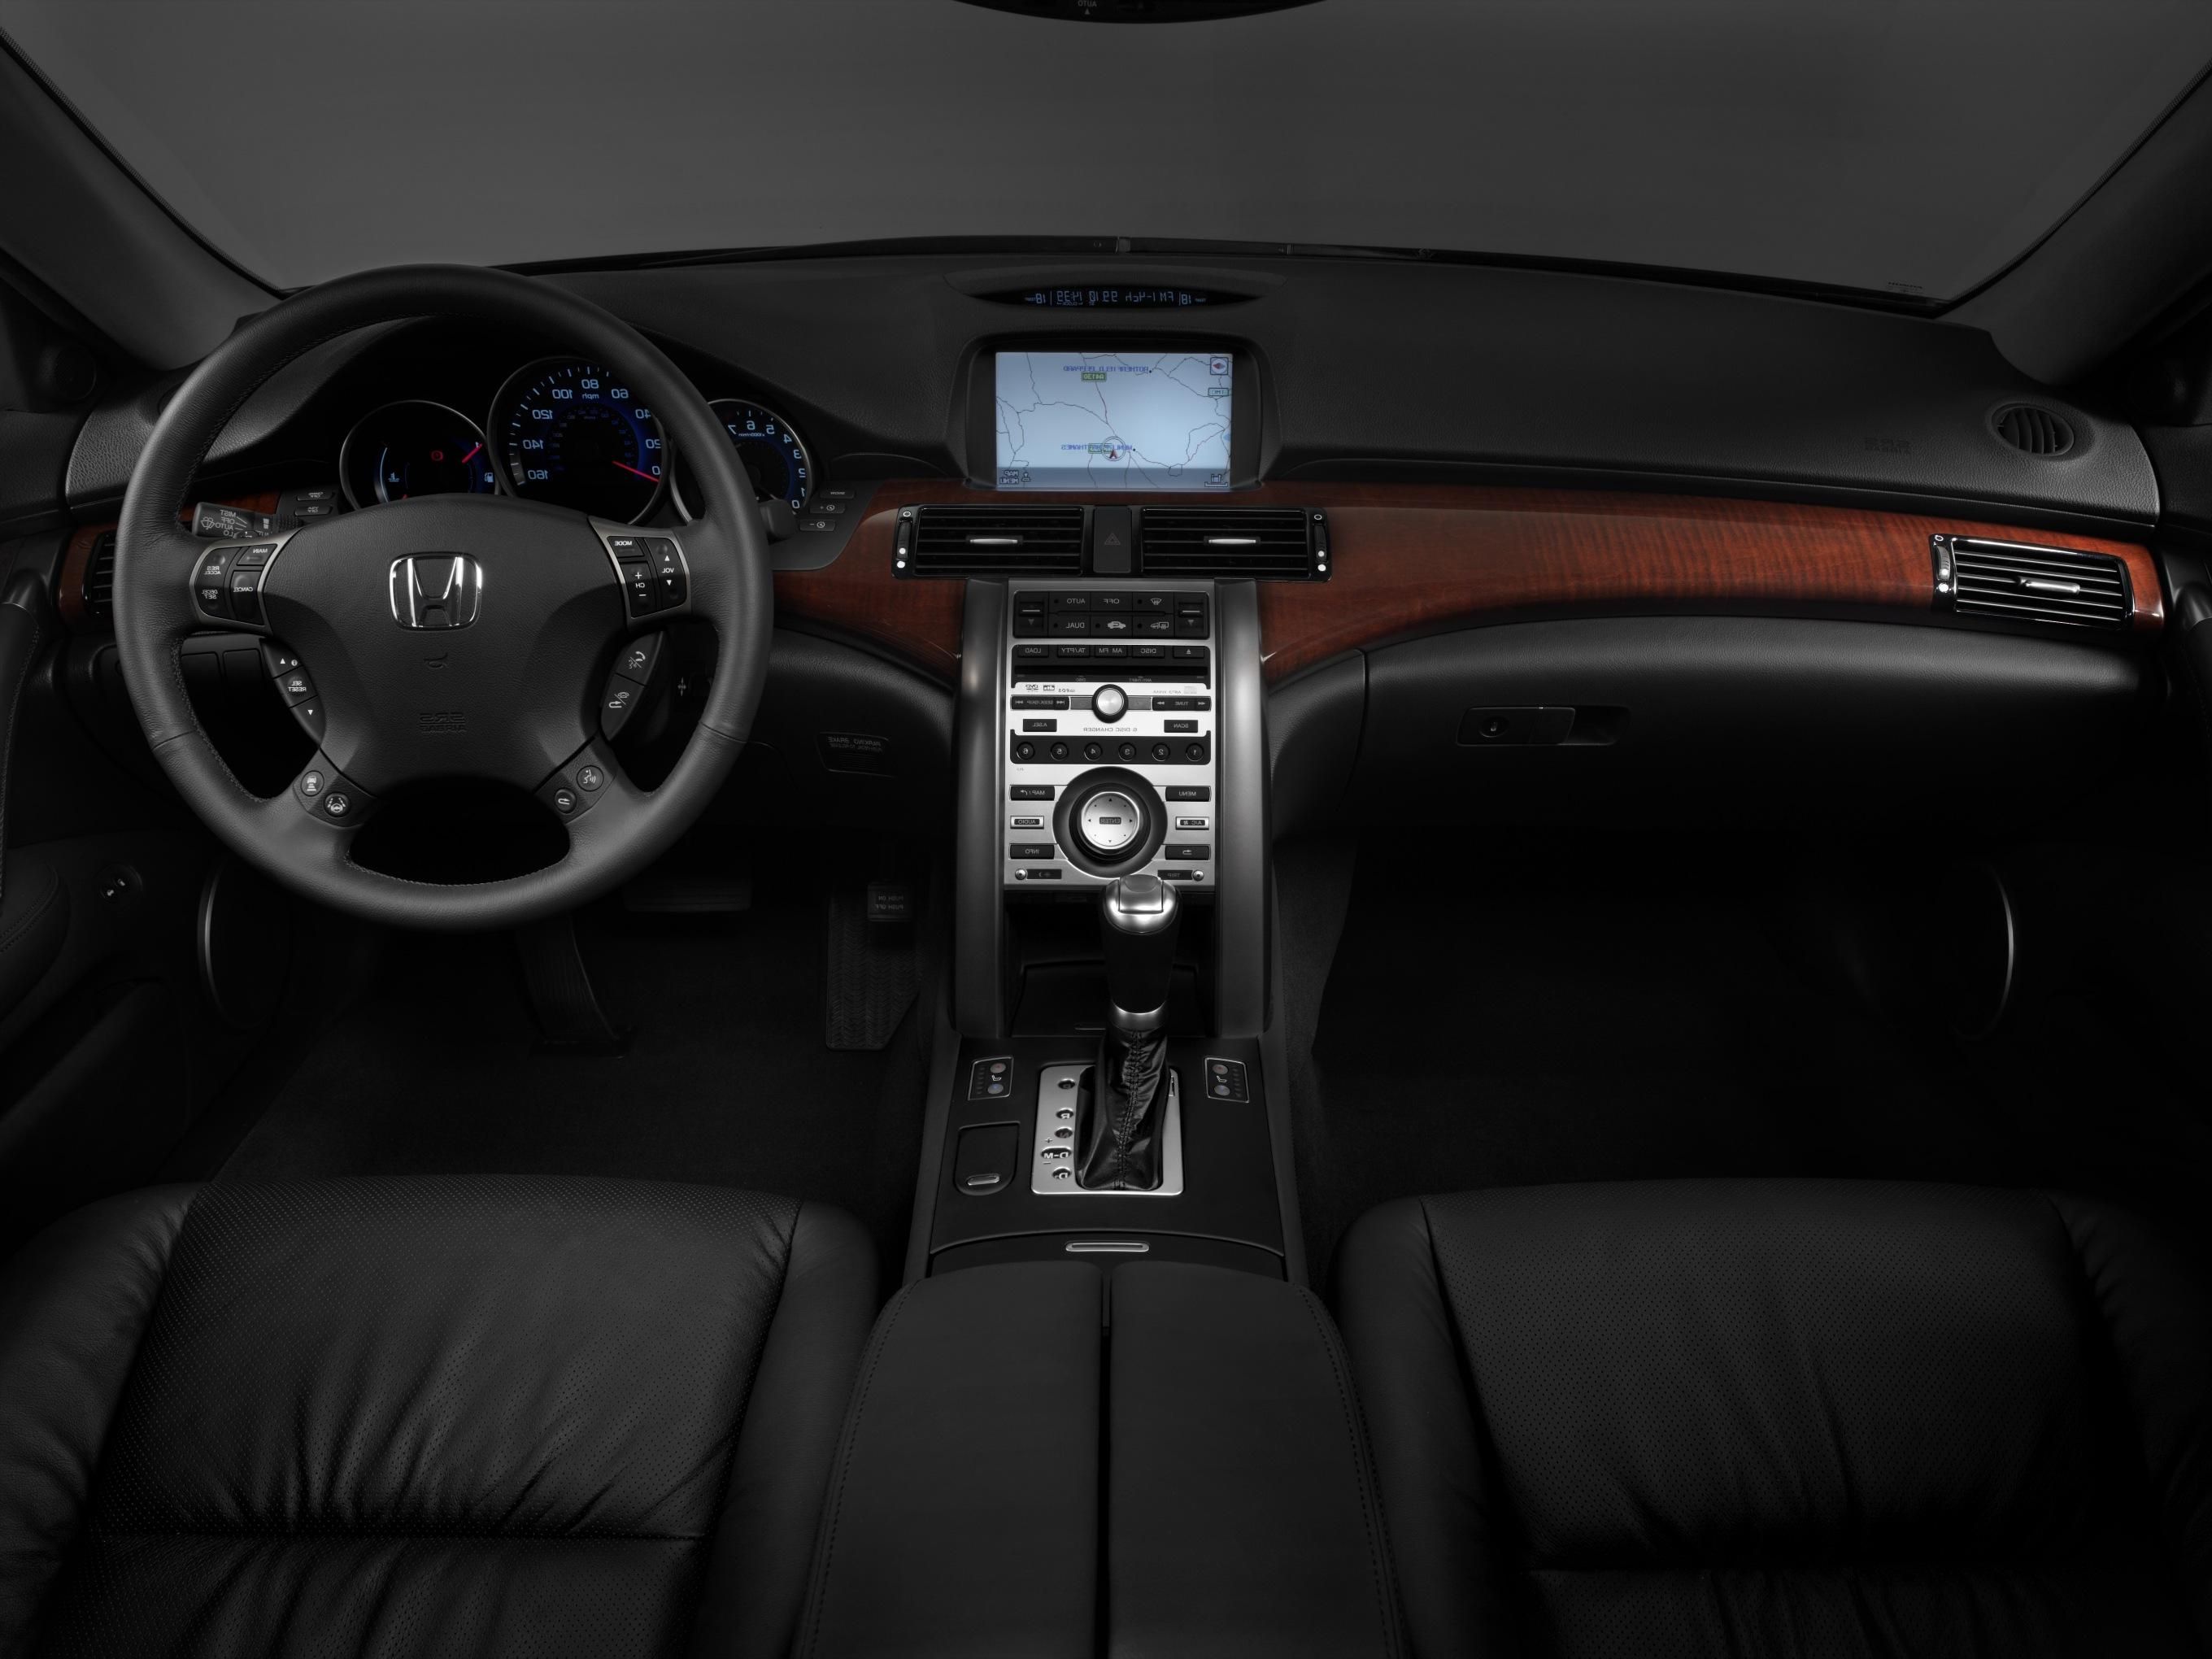 2007 Honda Legend (Acura RL)